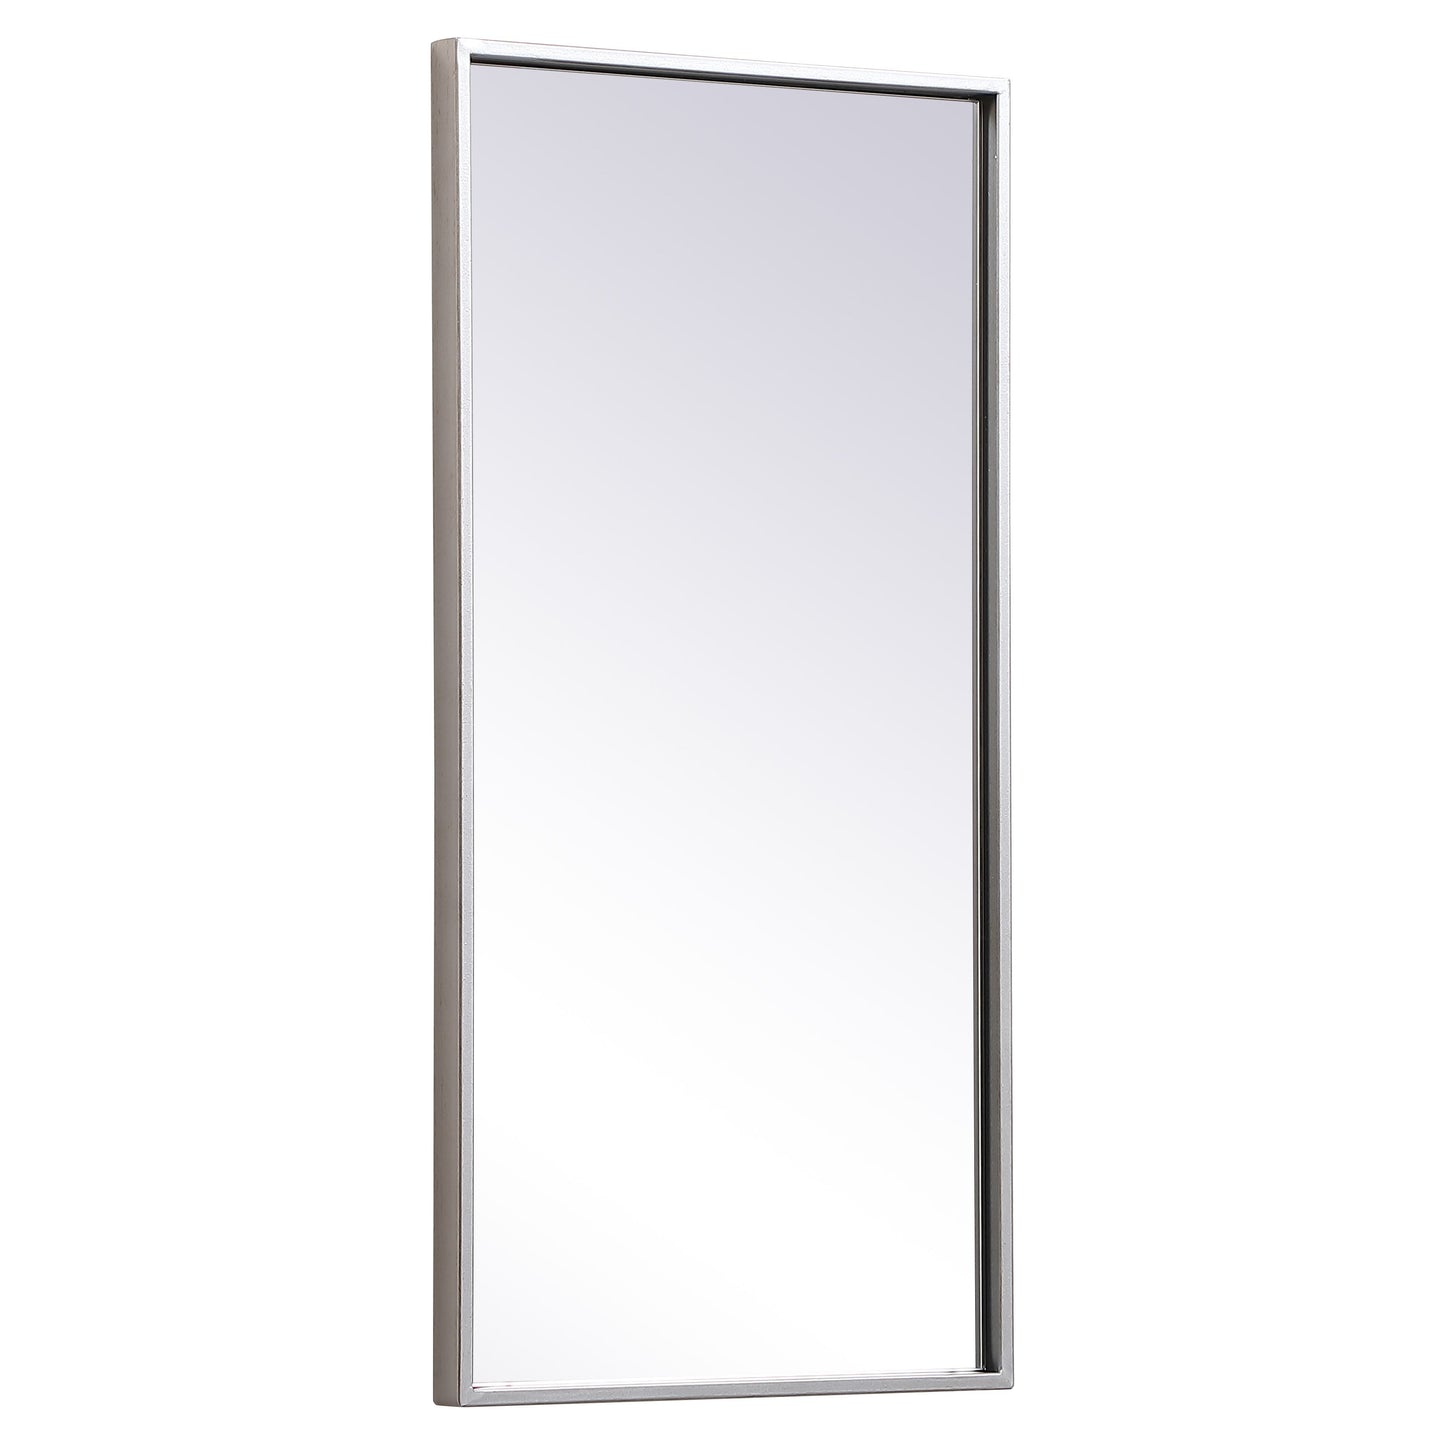 MR41428S Monet 28" x 14" Metal Framed Rectangular Mirror in Silver